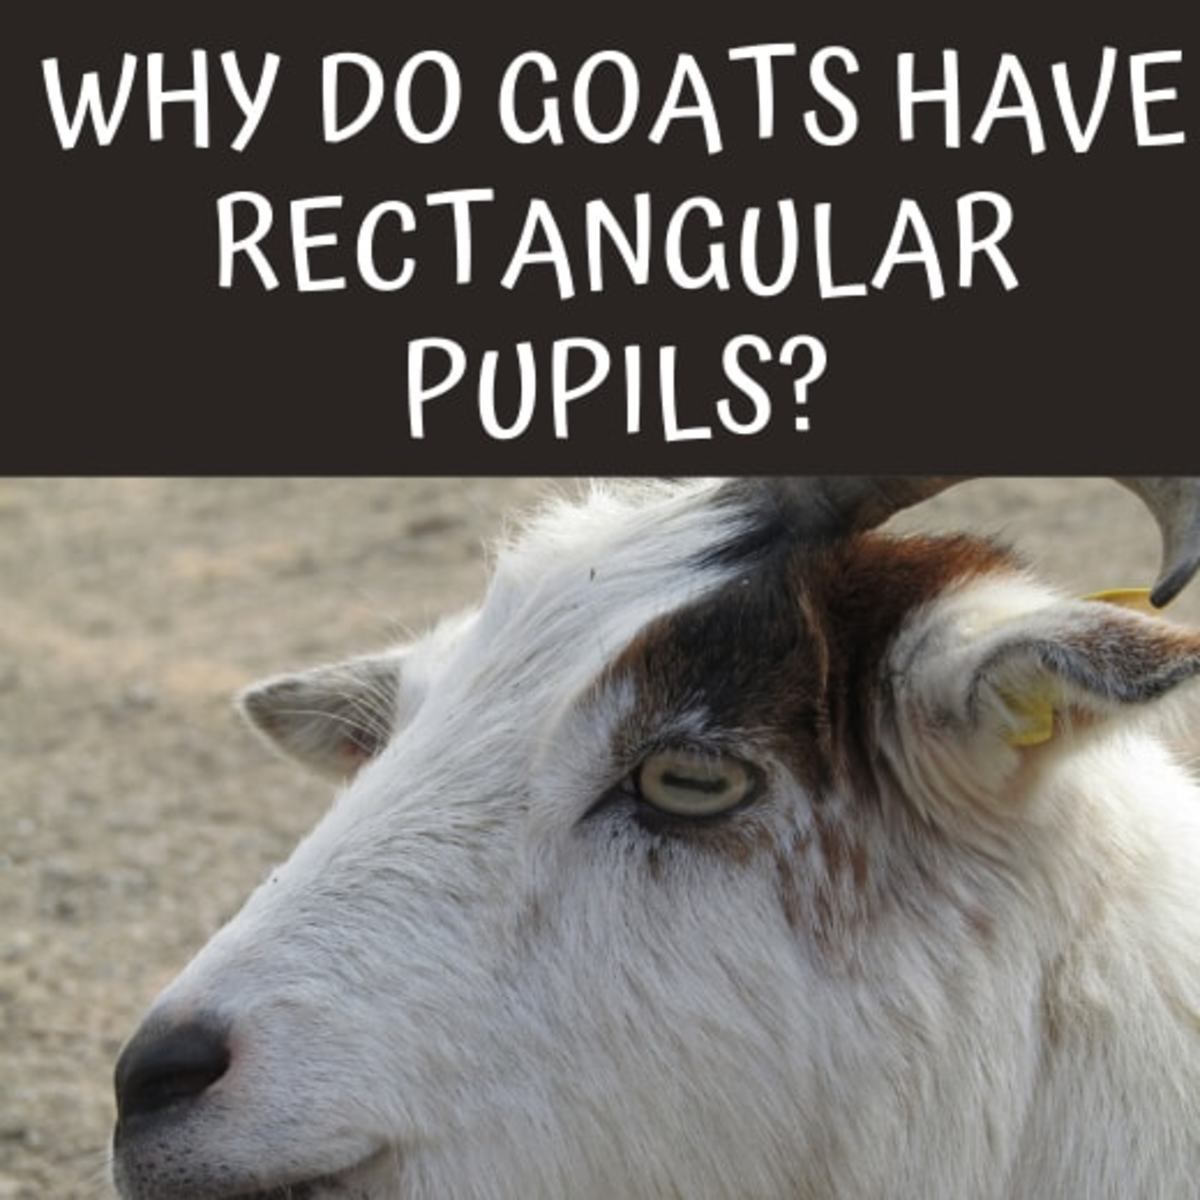 Goats' rectangular pupils are a striking evolutionary adaptation. 